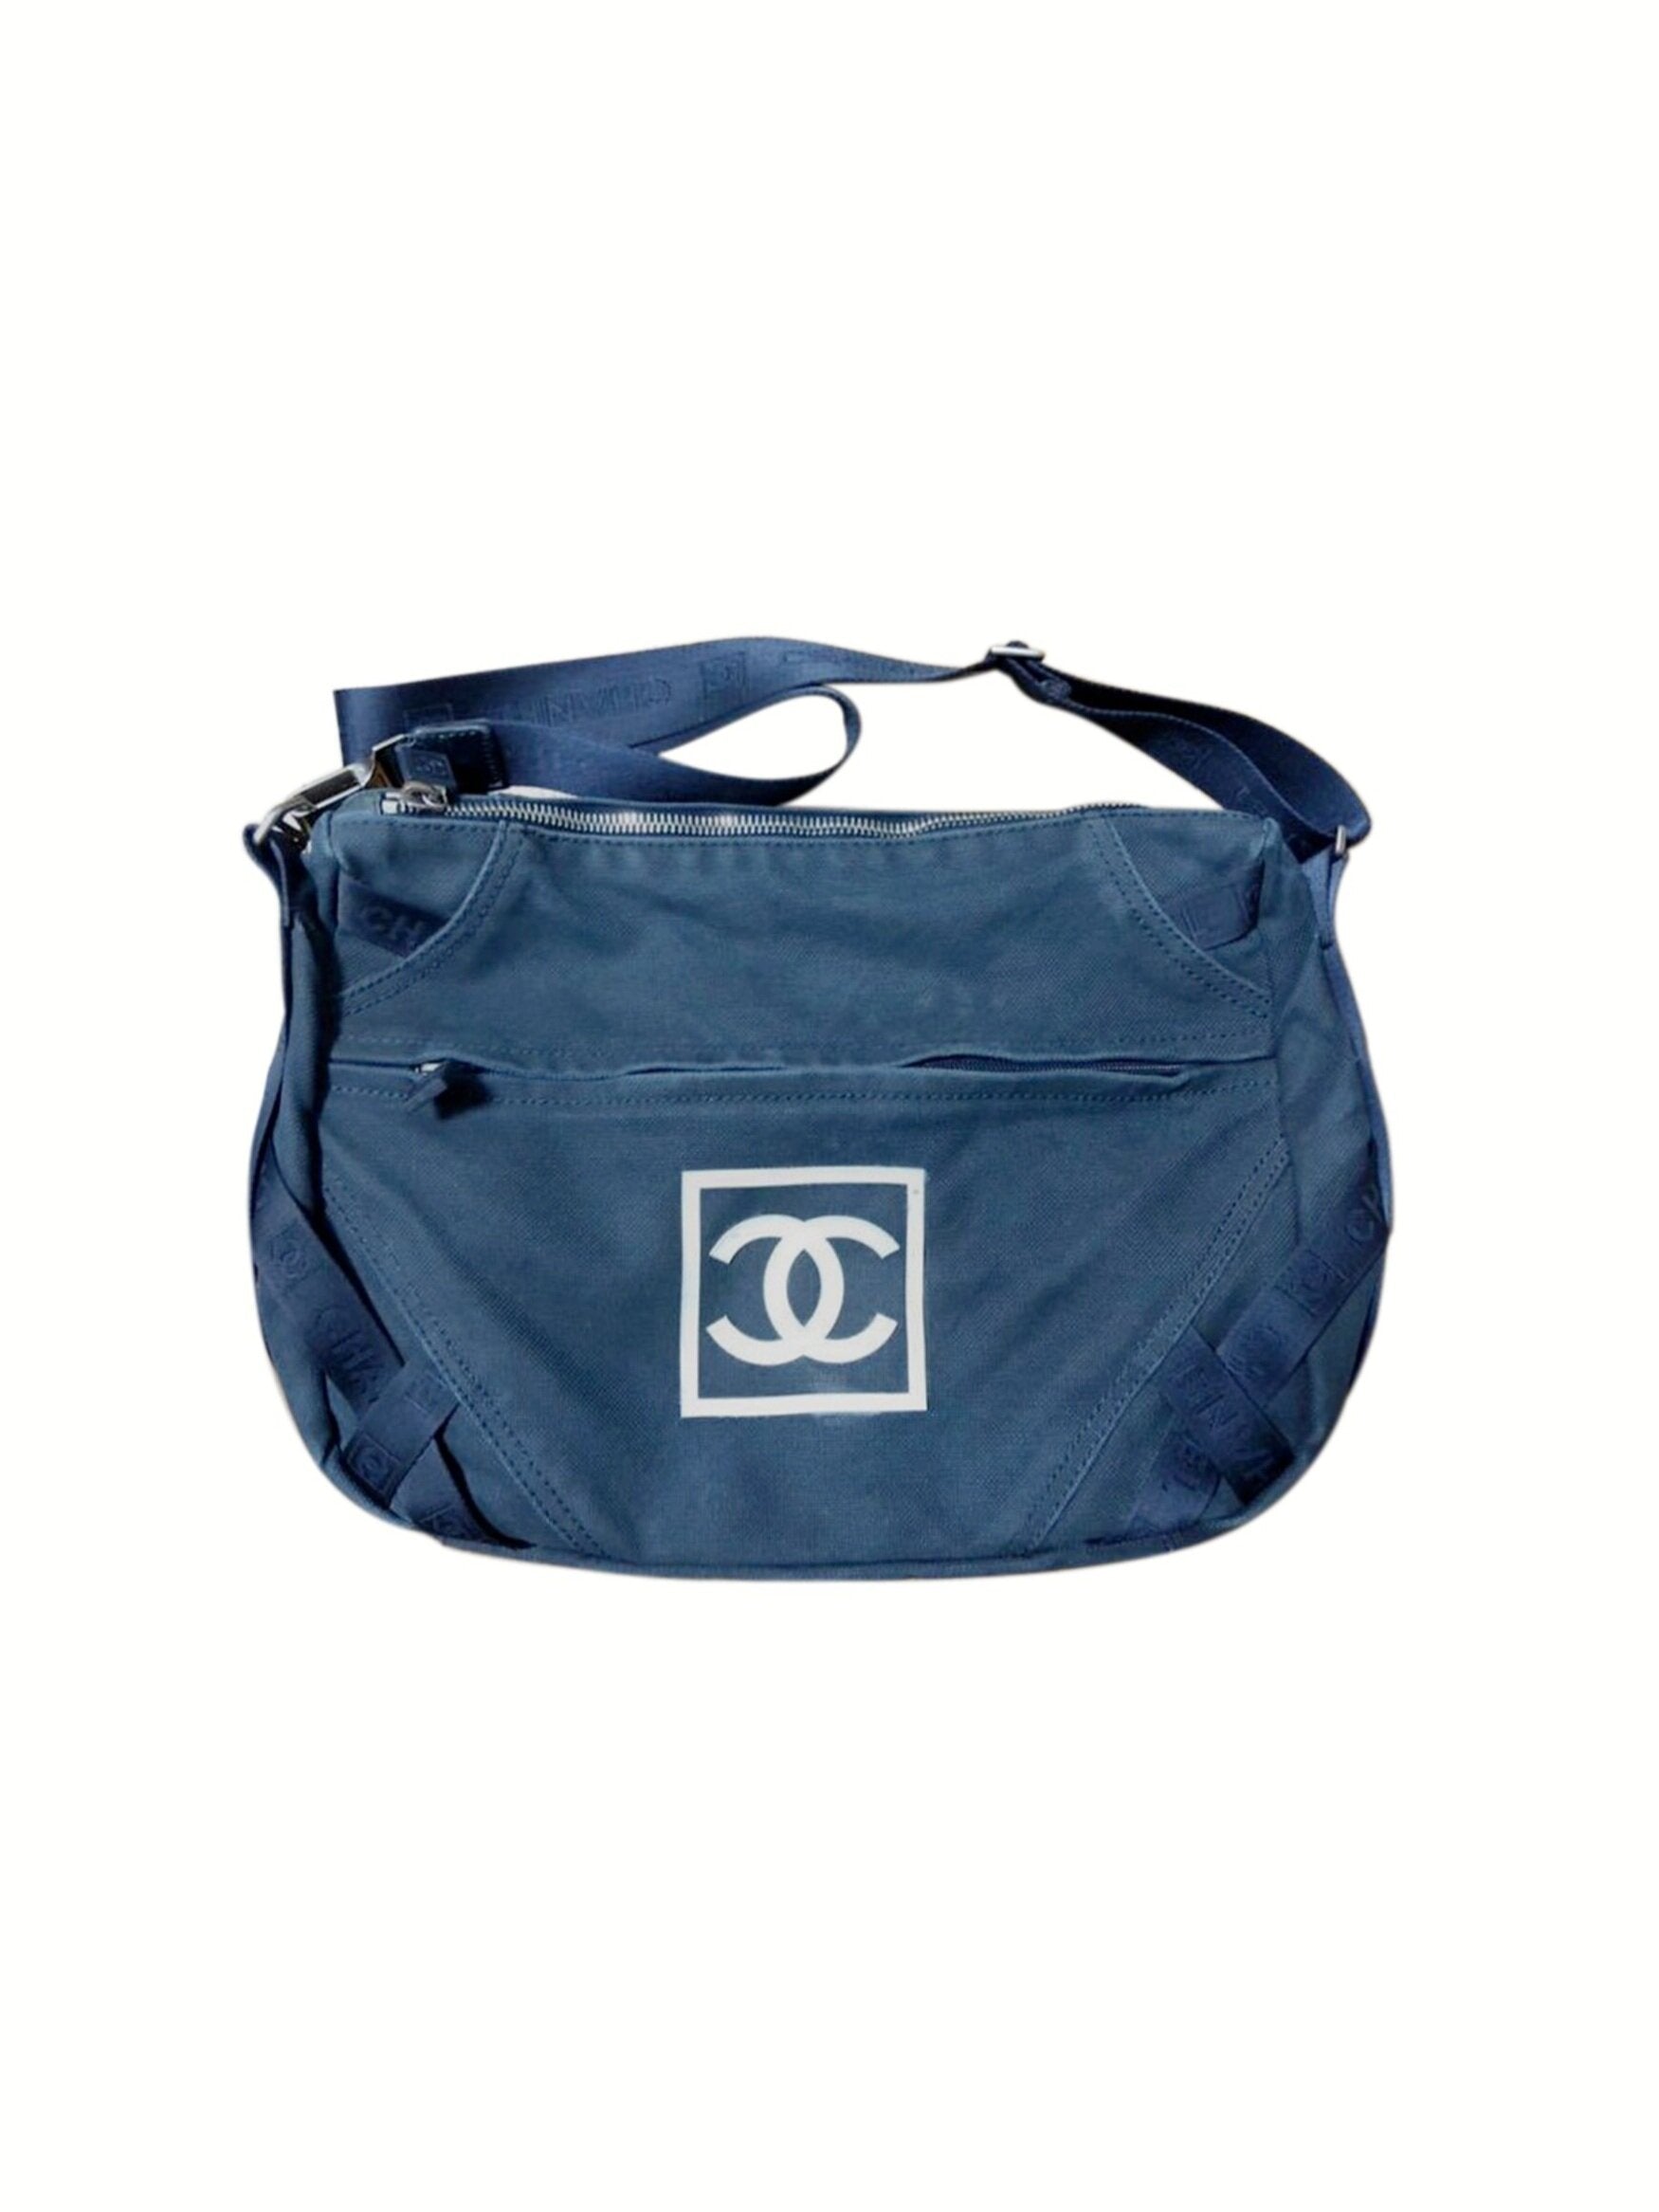 CHANEL Denim Exterior Crossbody Bags & Handbags for Women